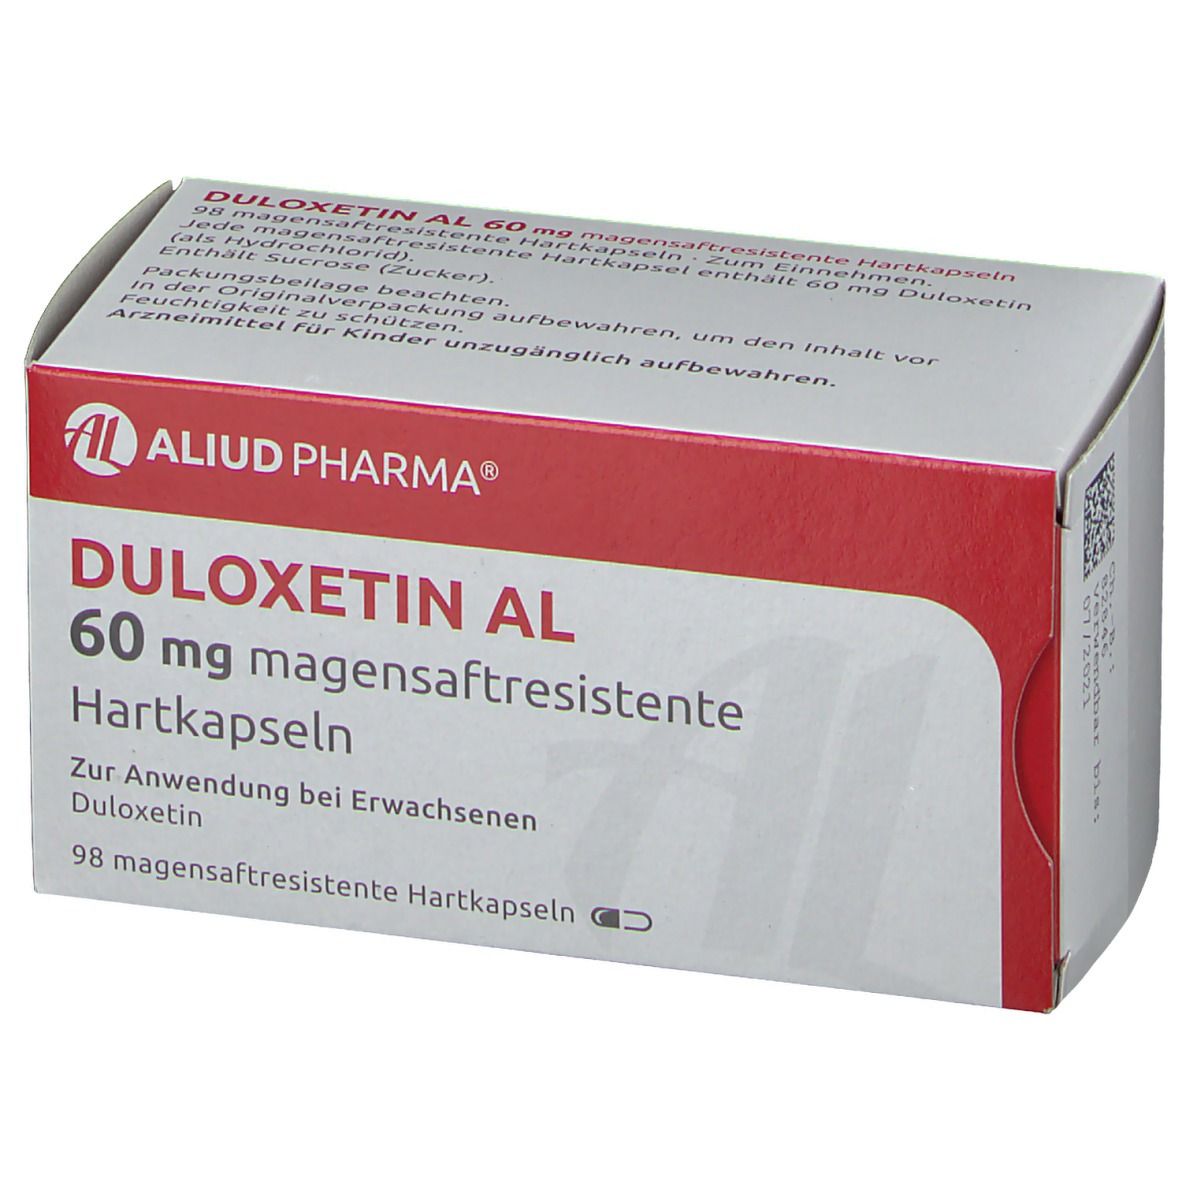 Duloxetin AL 60 mg